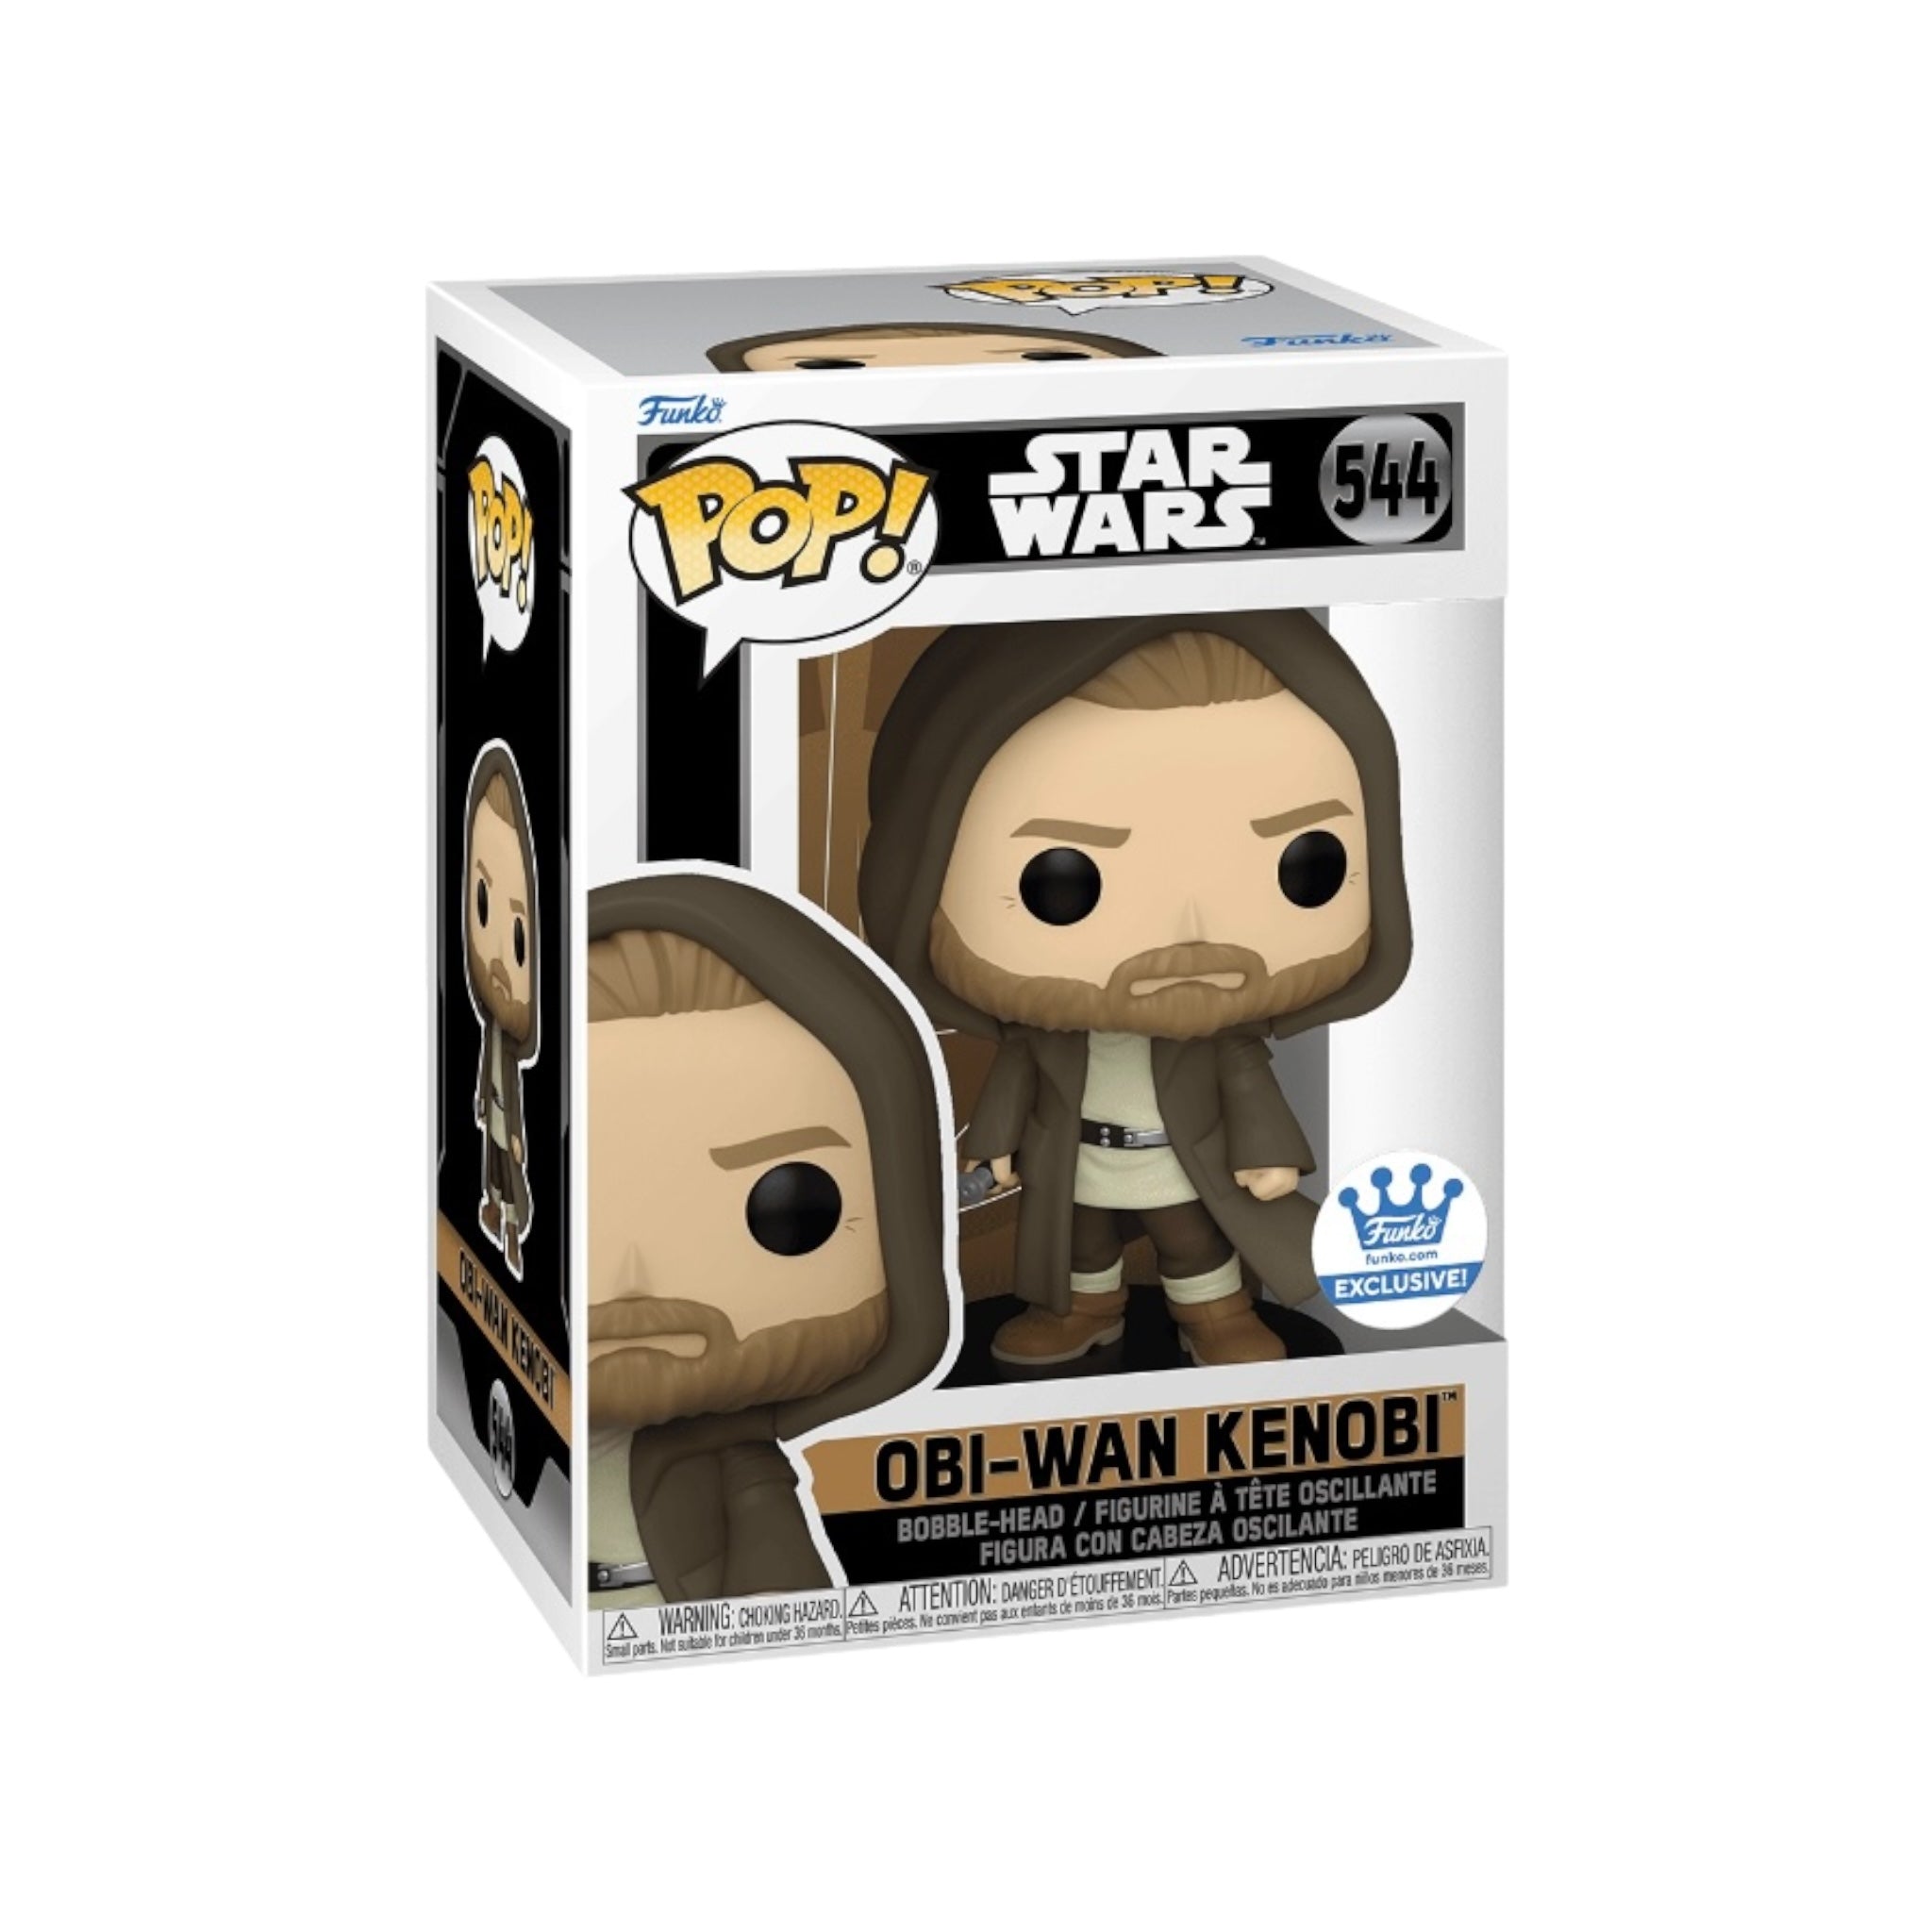 Obi-Wan Kenobi #544 (Hooded) Funko Pop! - Star Wars: Obi-Wan Kenobi - Funko Shop Exclusive